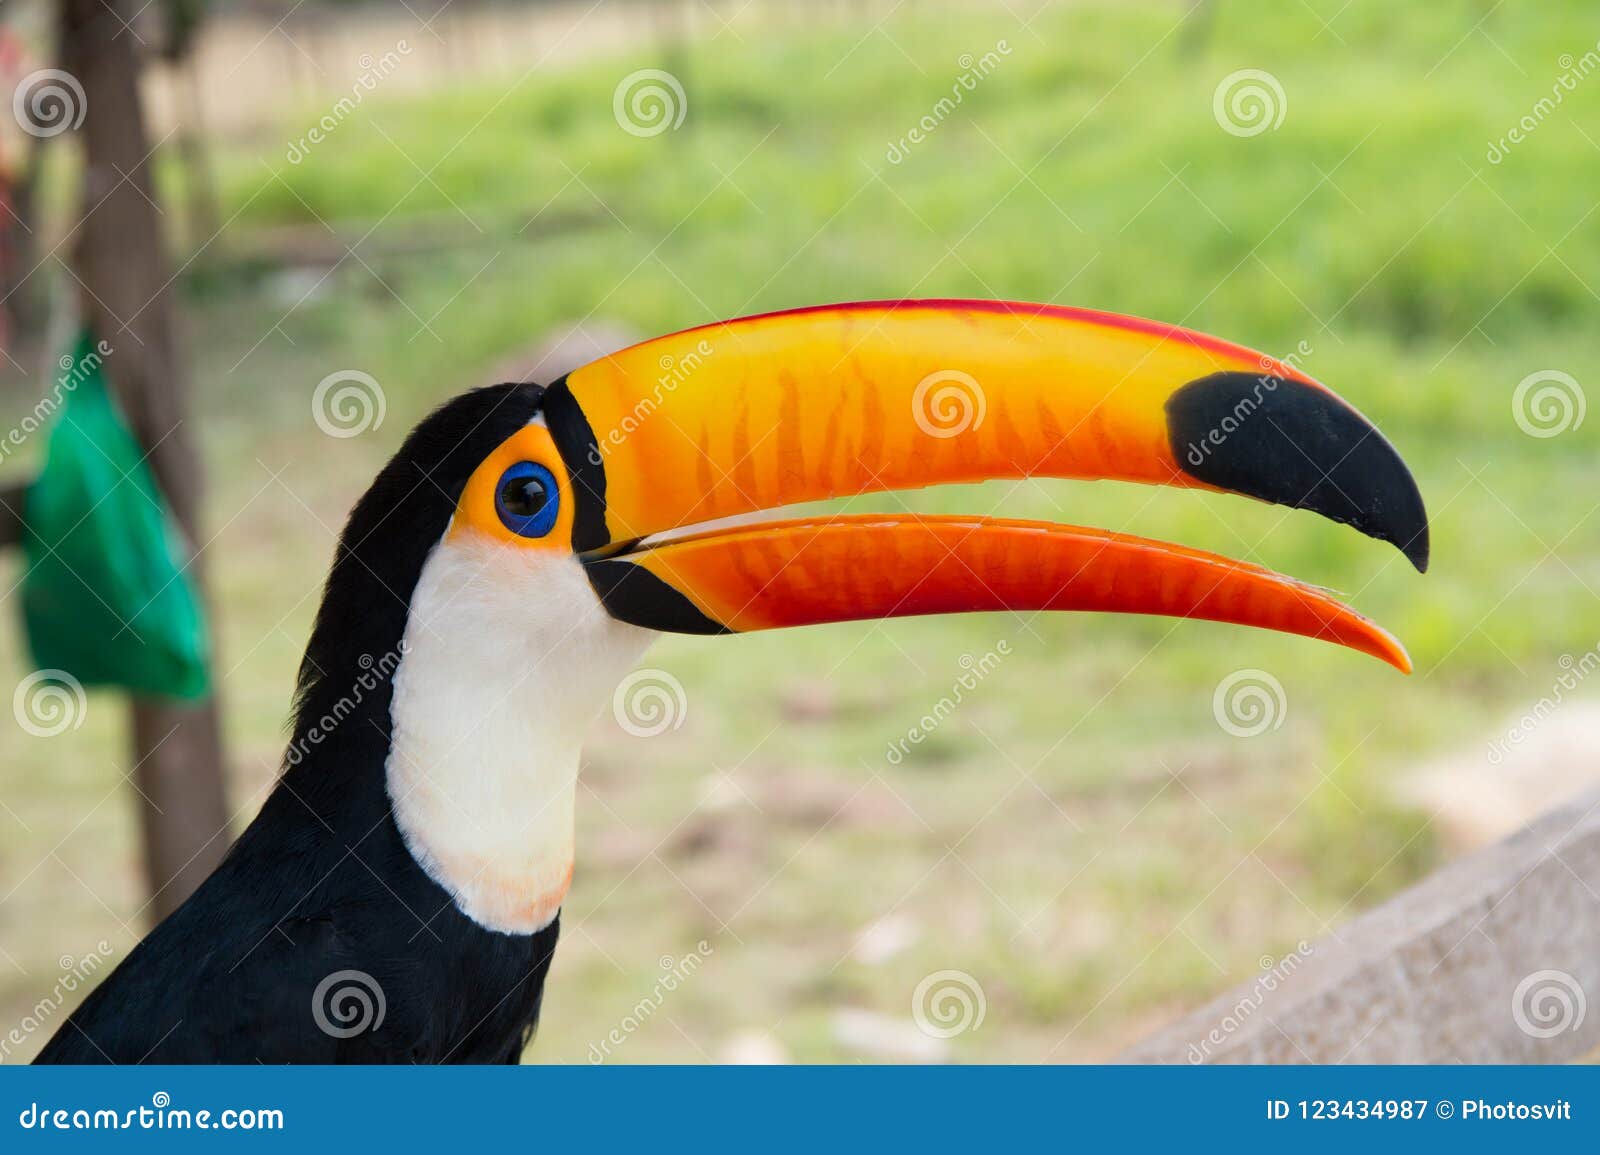 toucan bird in boca de valeria, brazil. toco toucan on nature. beautiful toucan bird with orange beak. toucan in